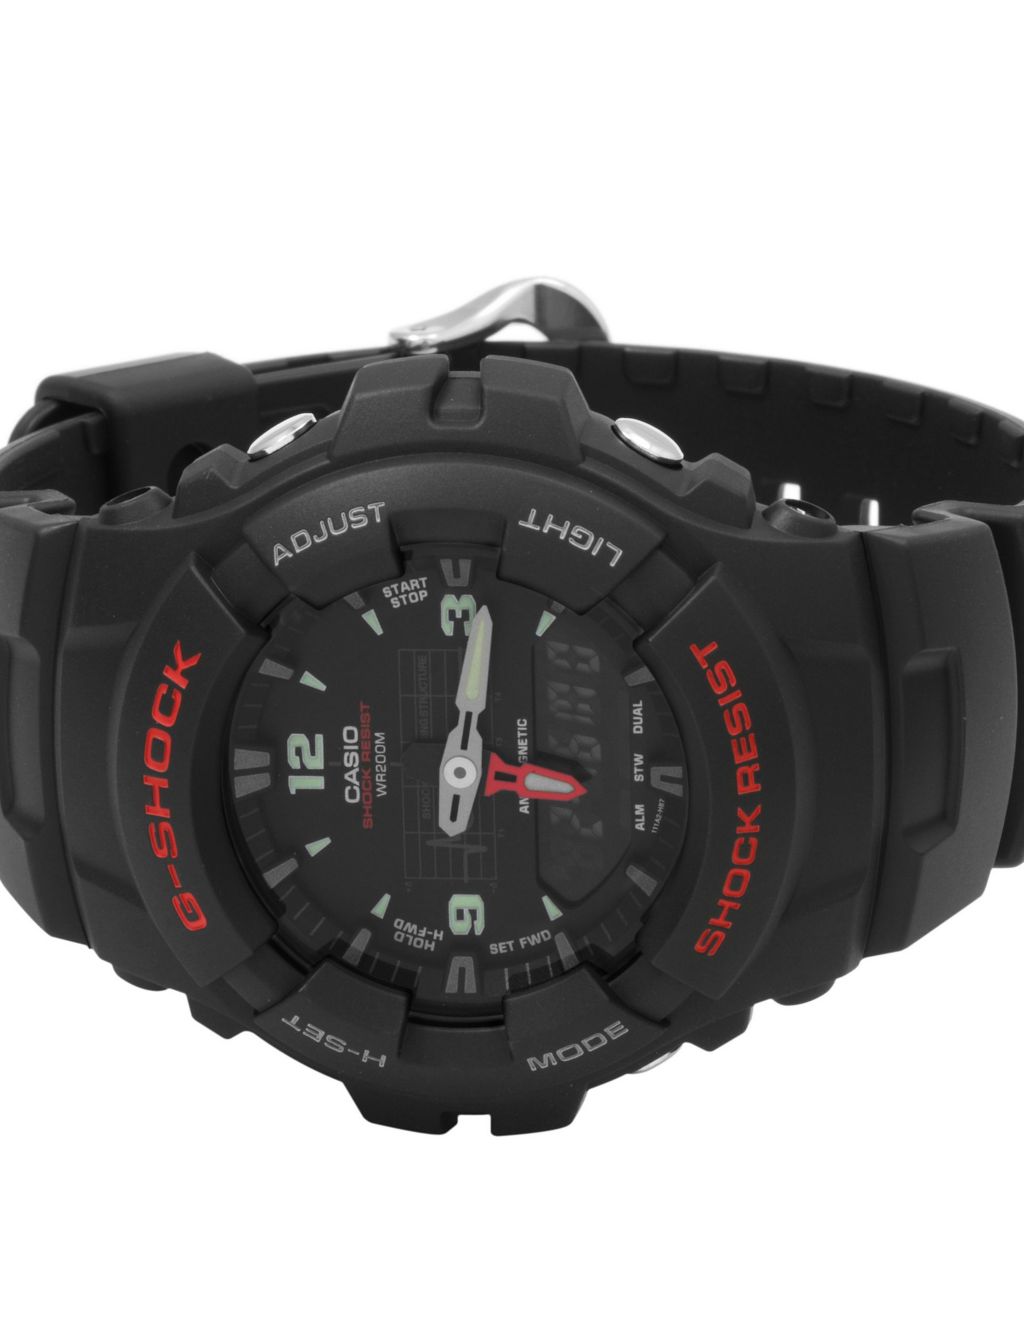 Casio G-Shock Alarm Chronograph Black Watch image 2